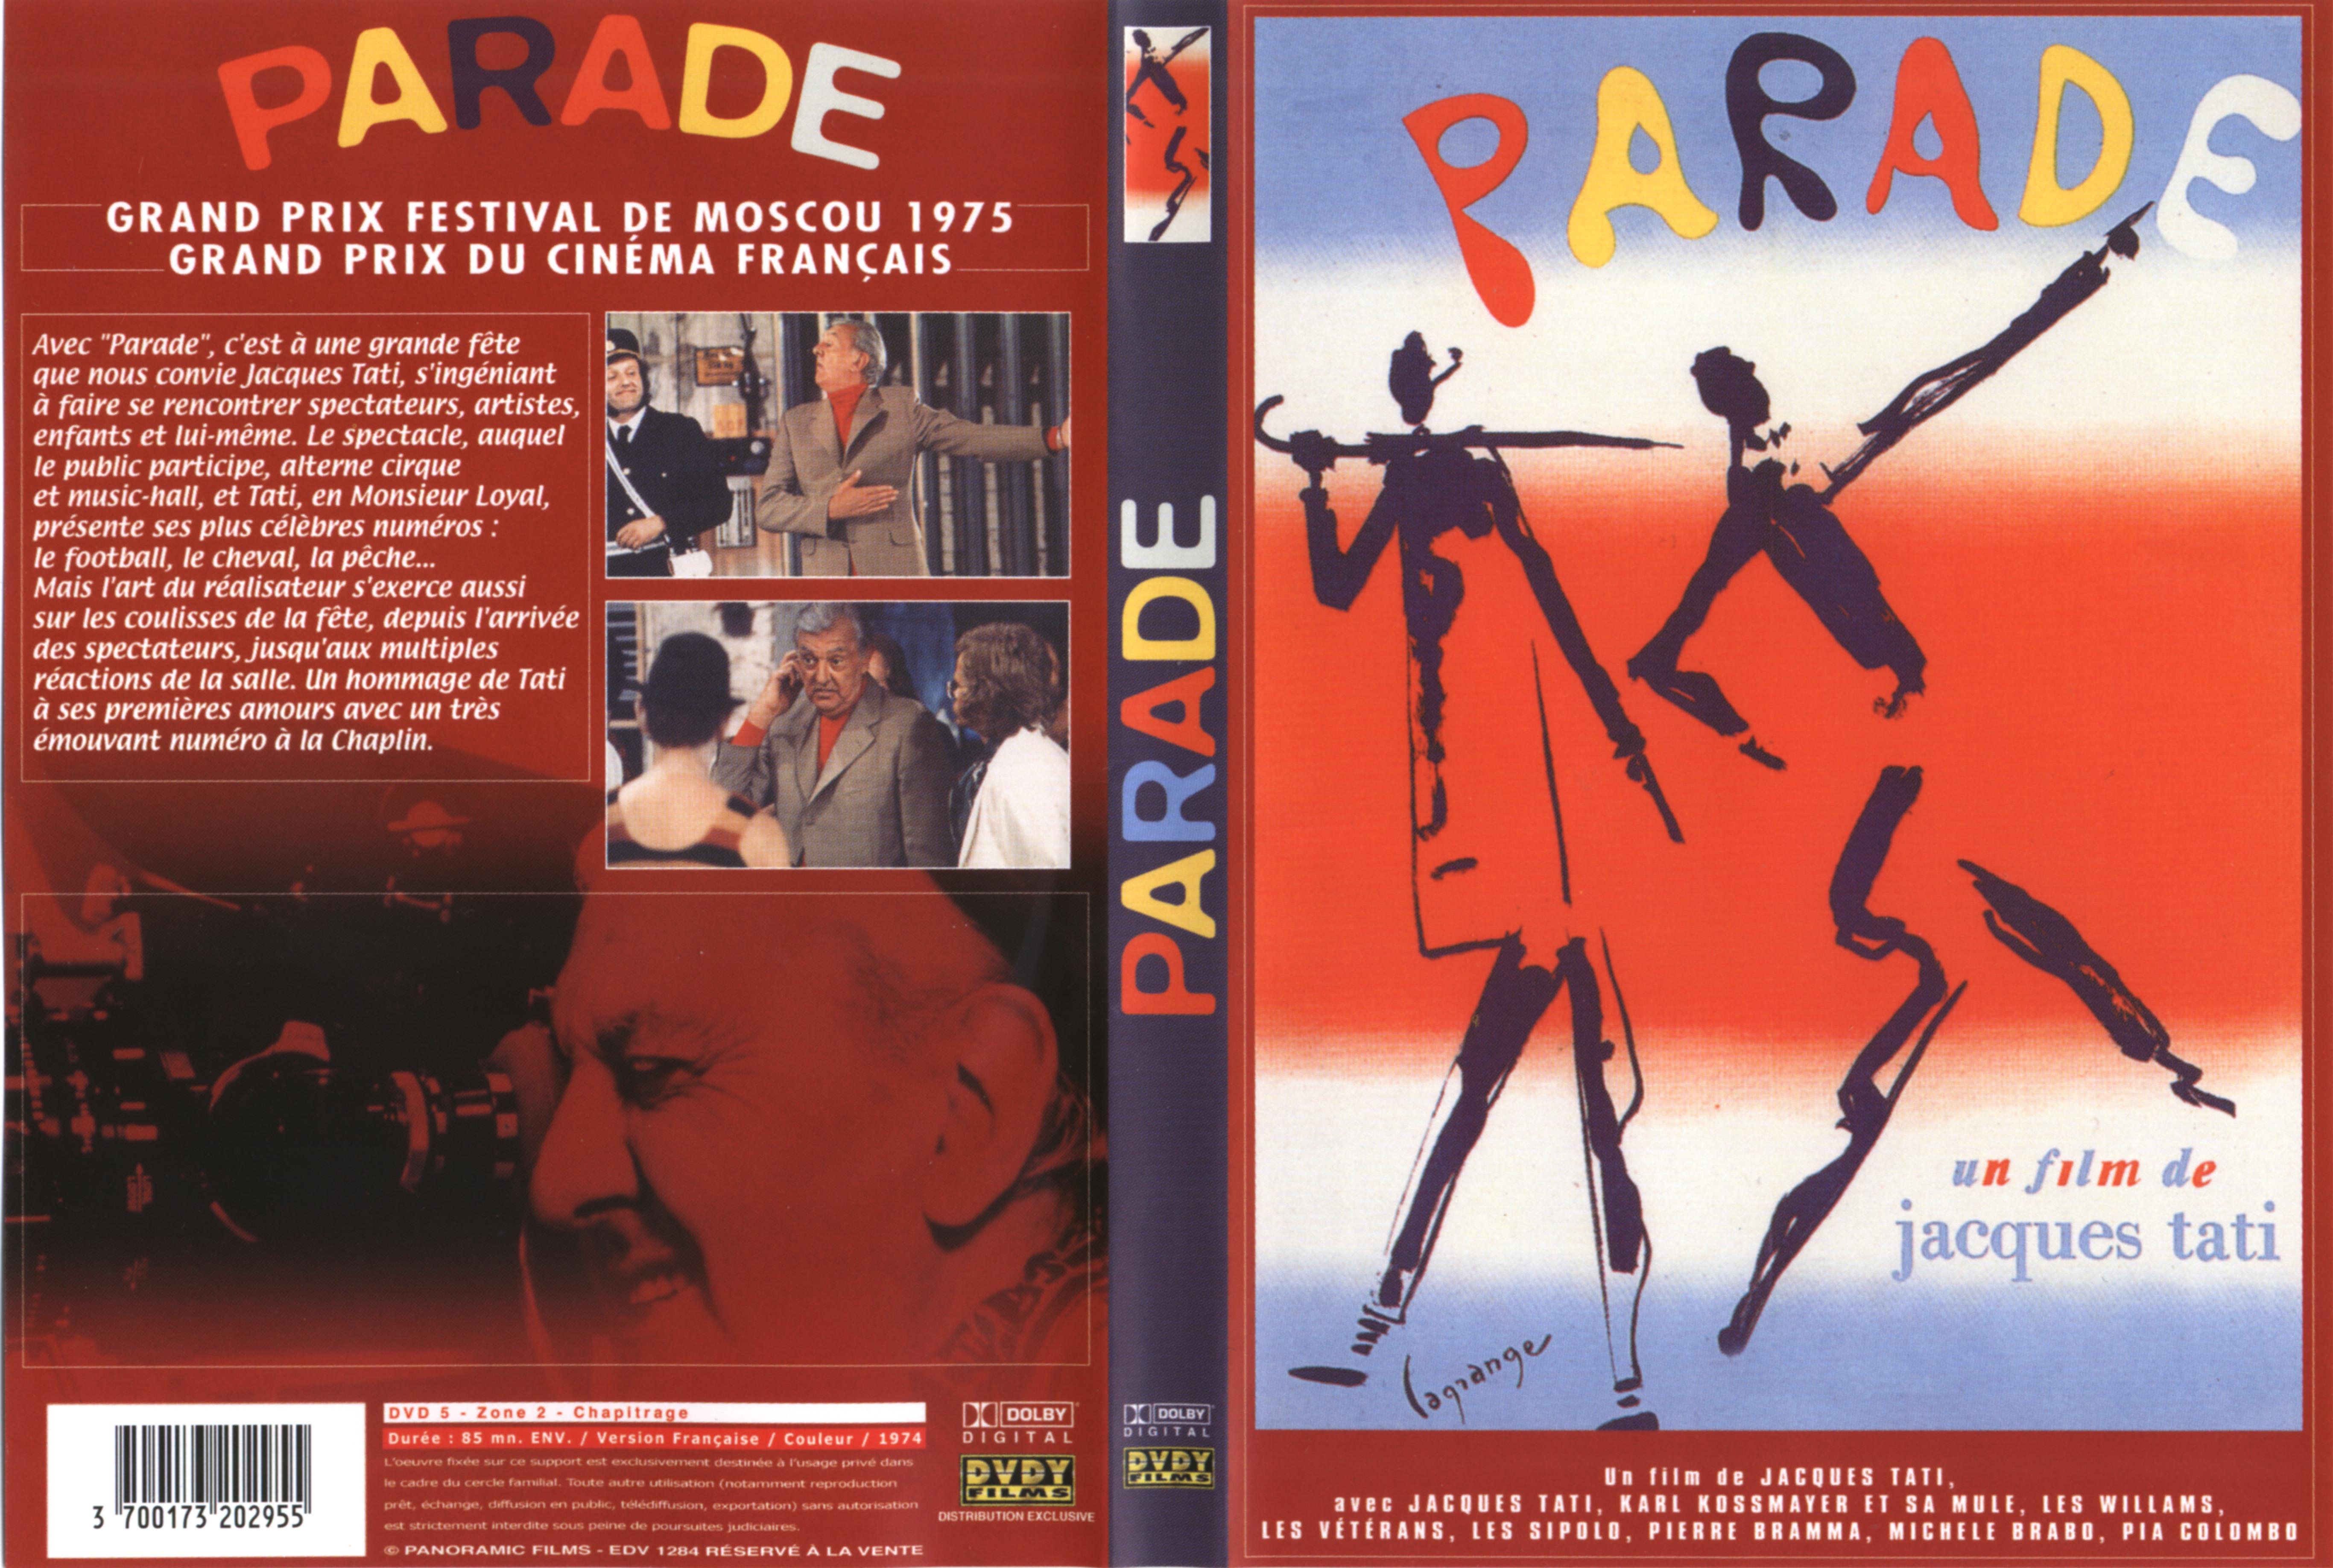 Jaquette DVD Parade